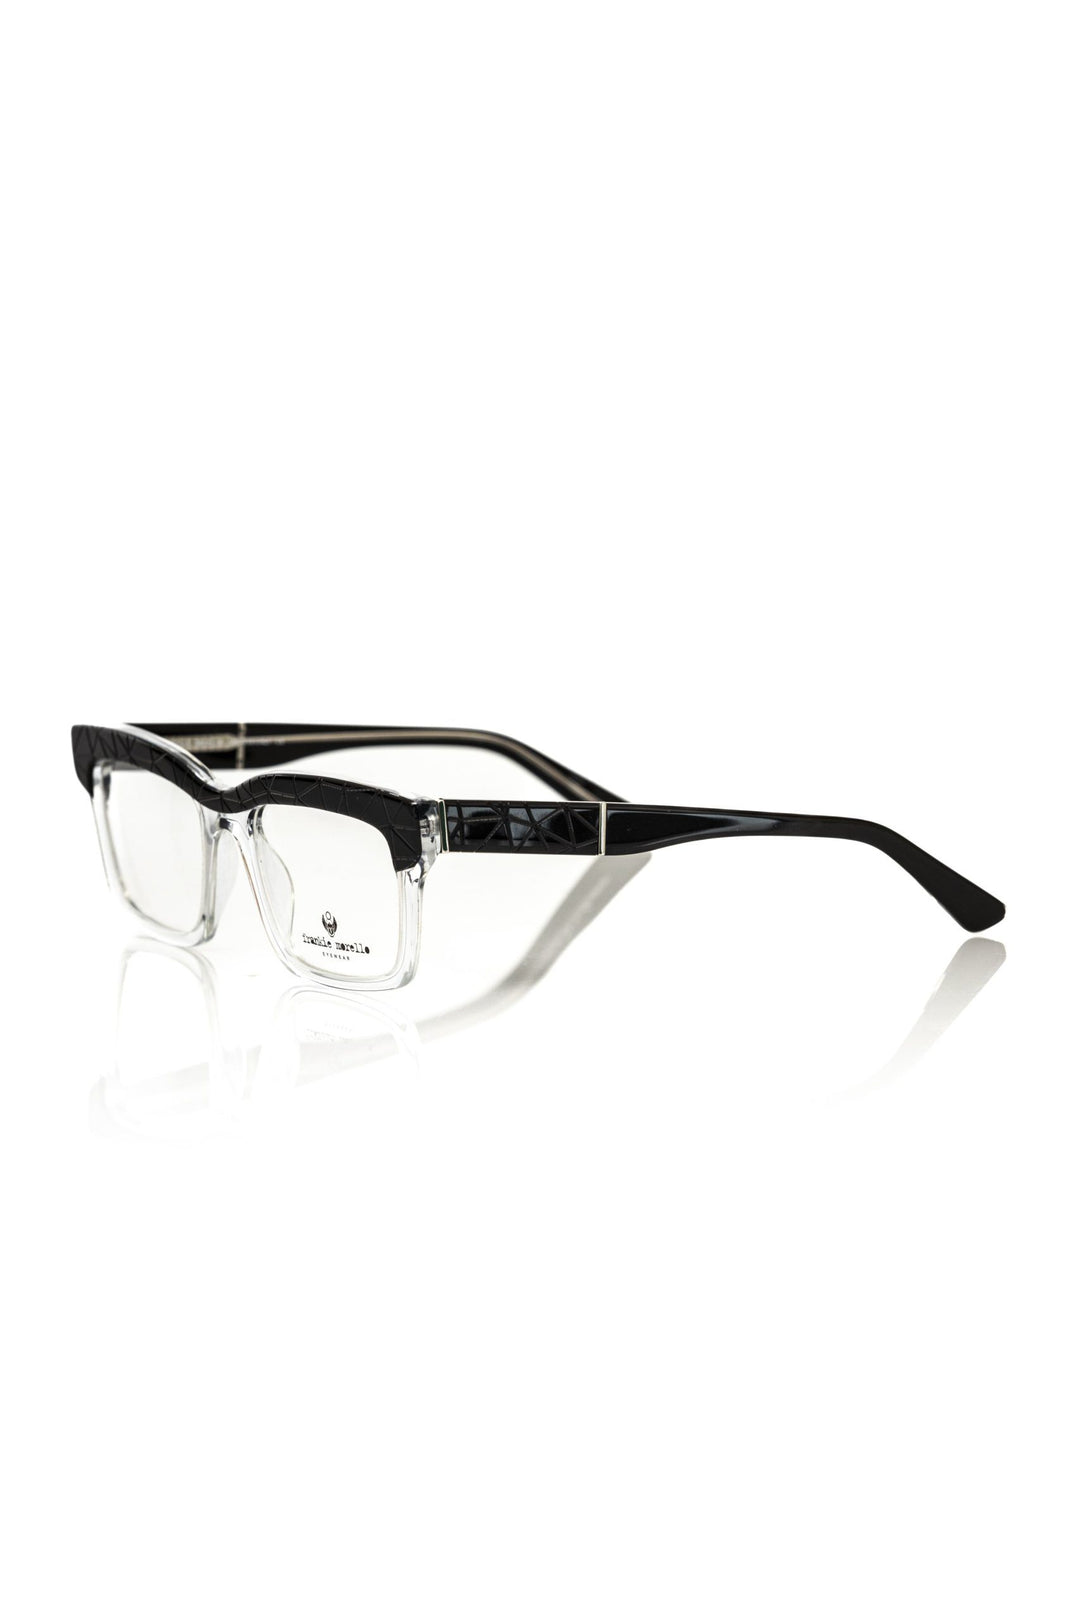 Frankie Morello Geometric Chic Transparent Clubmaster Eyeglasses